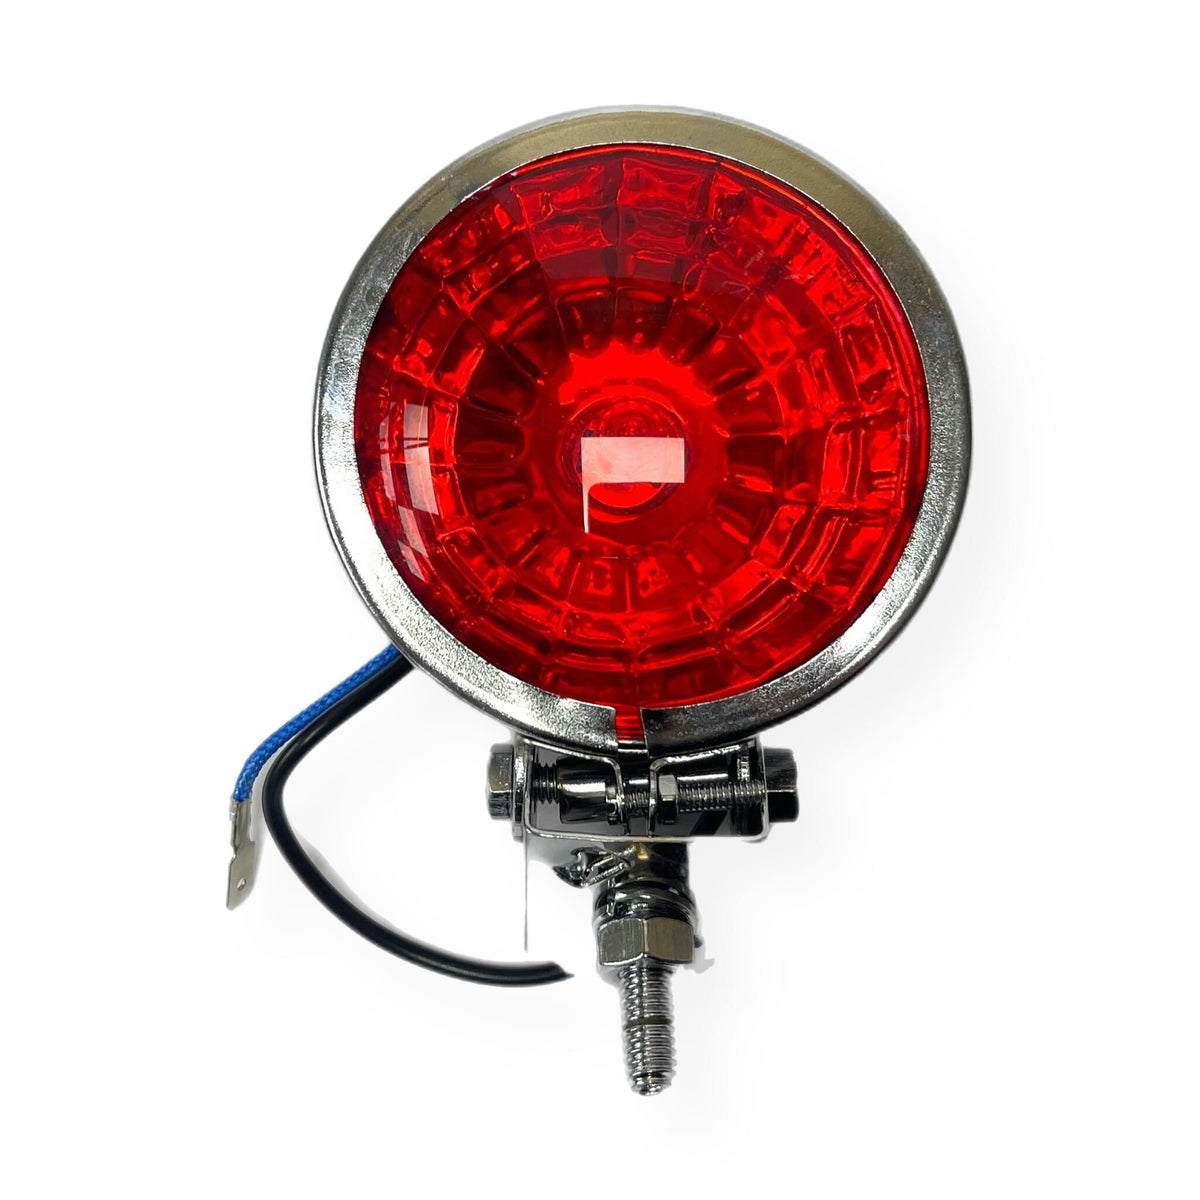 Vespa Lambretta Scooter Lamp Spot Light 9cm Honeycomb Chrome Red Lens